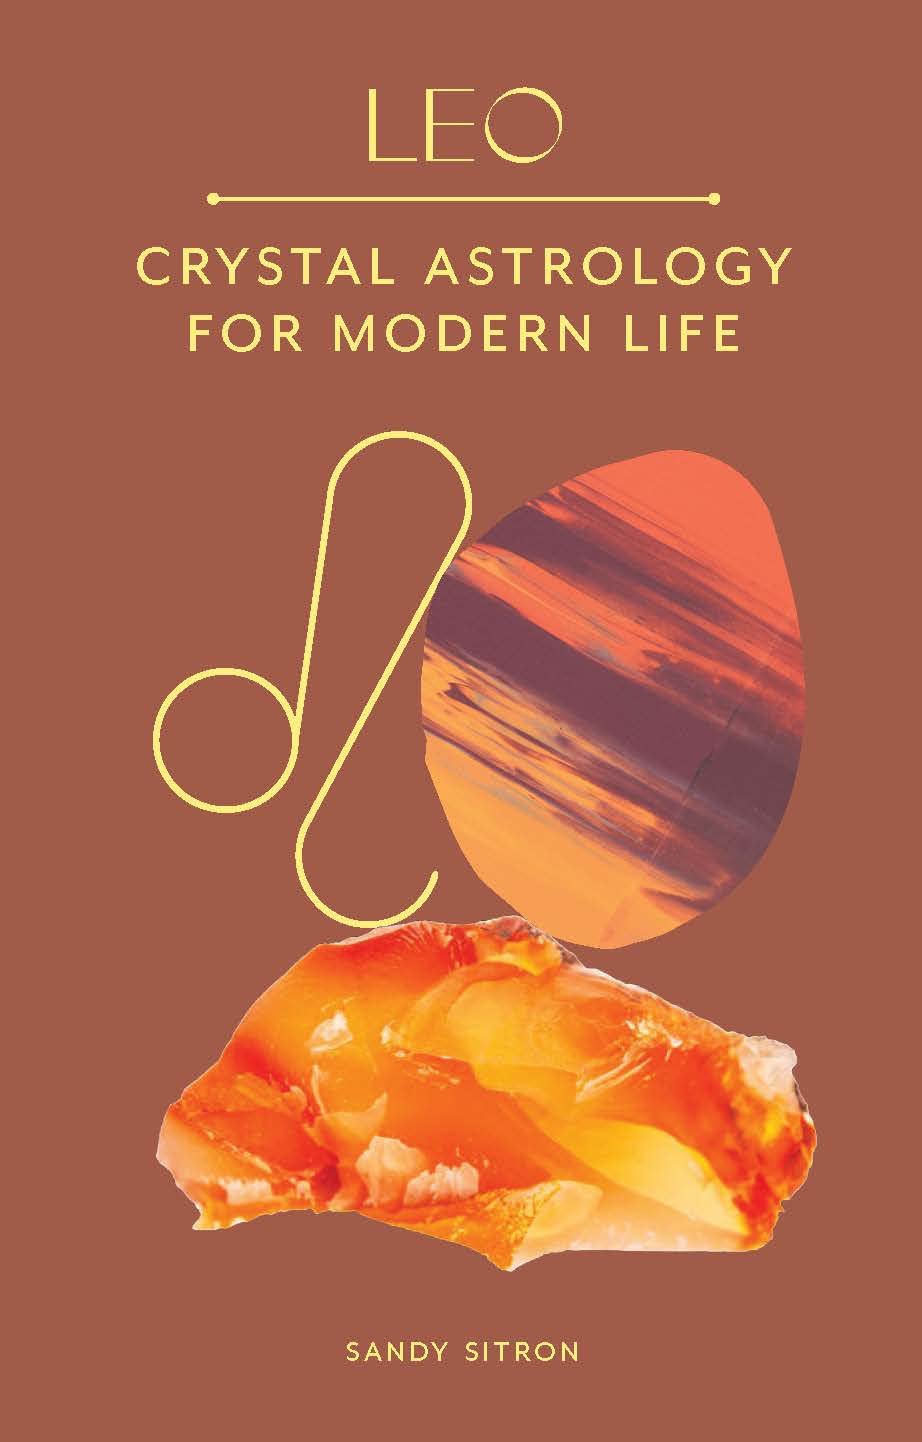 Crystal Astrology For Modern Life | Leo | Sandy Sitron